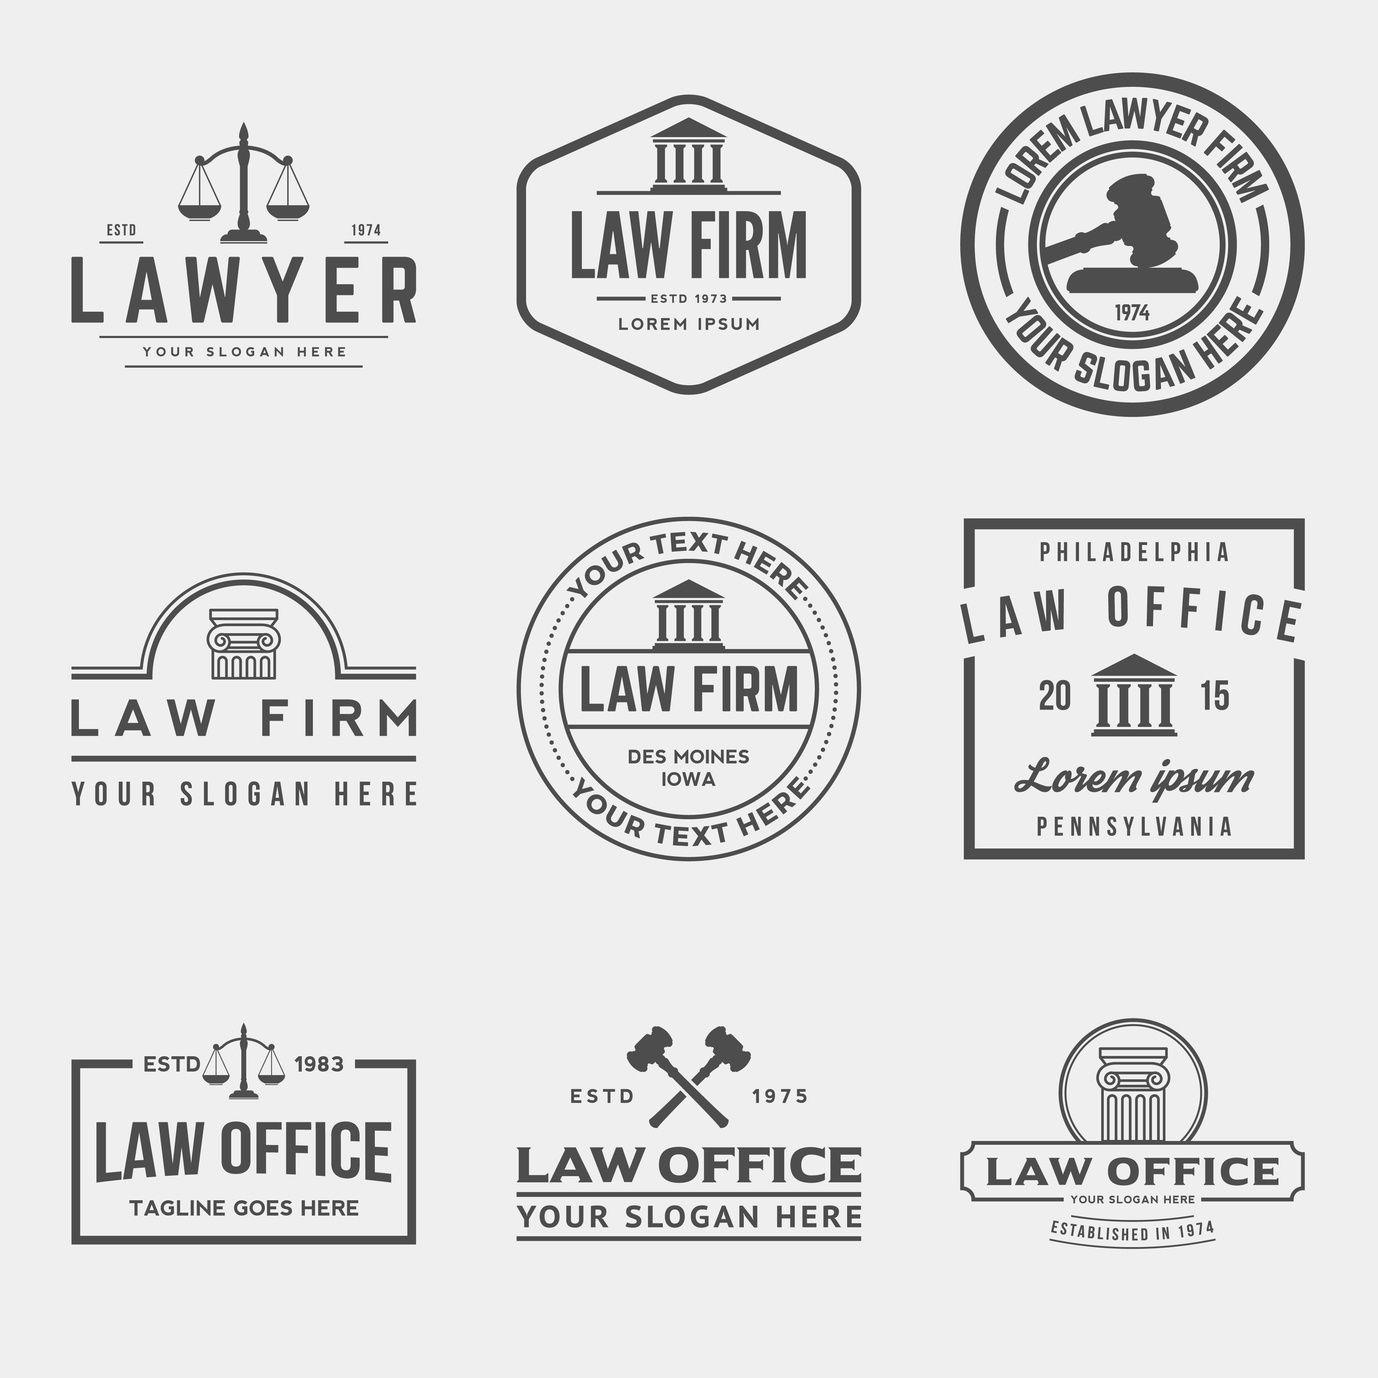 Established Logo - Elements to Include in an Attorney Logo Design • Online Logo